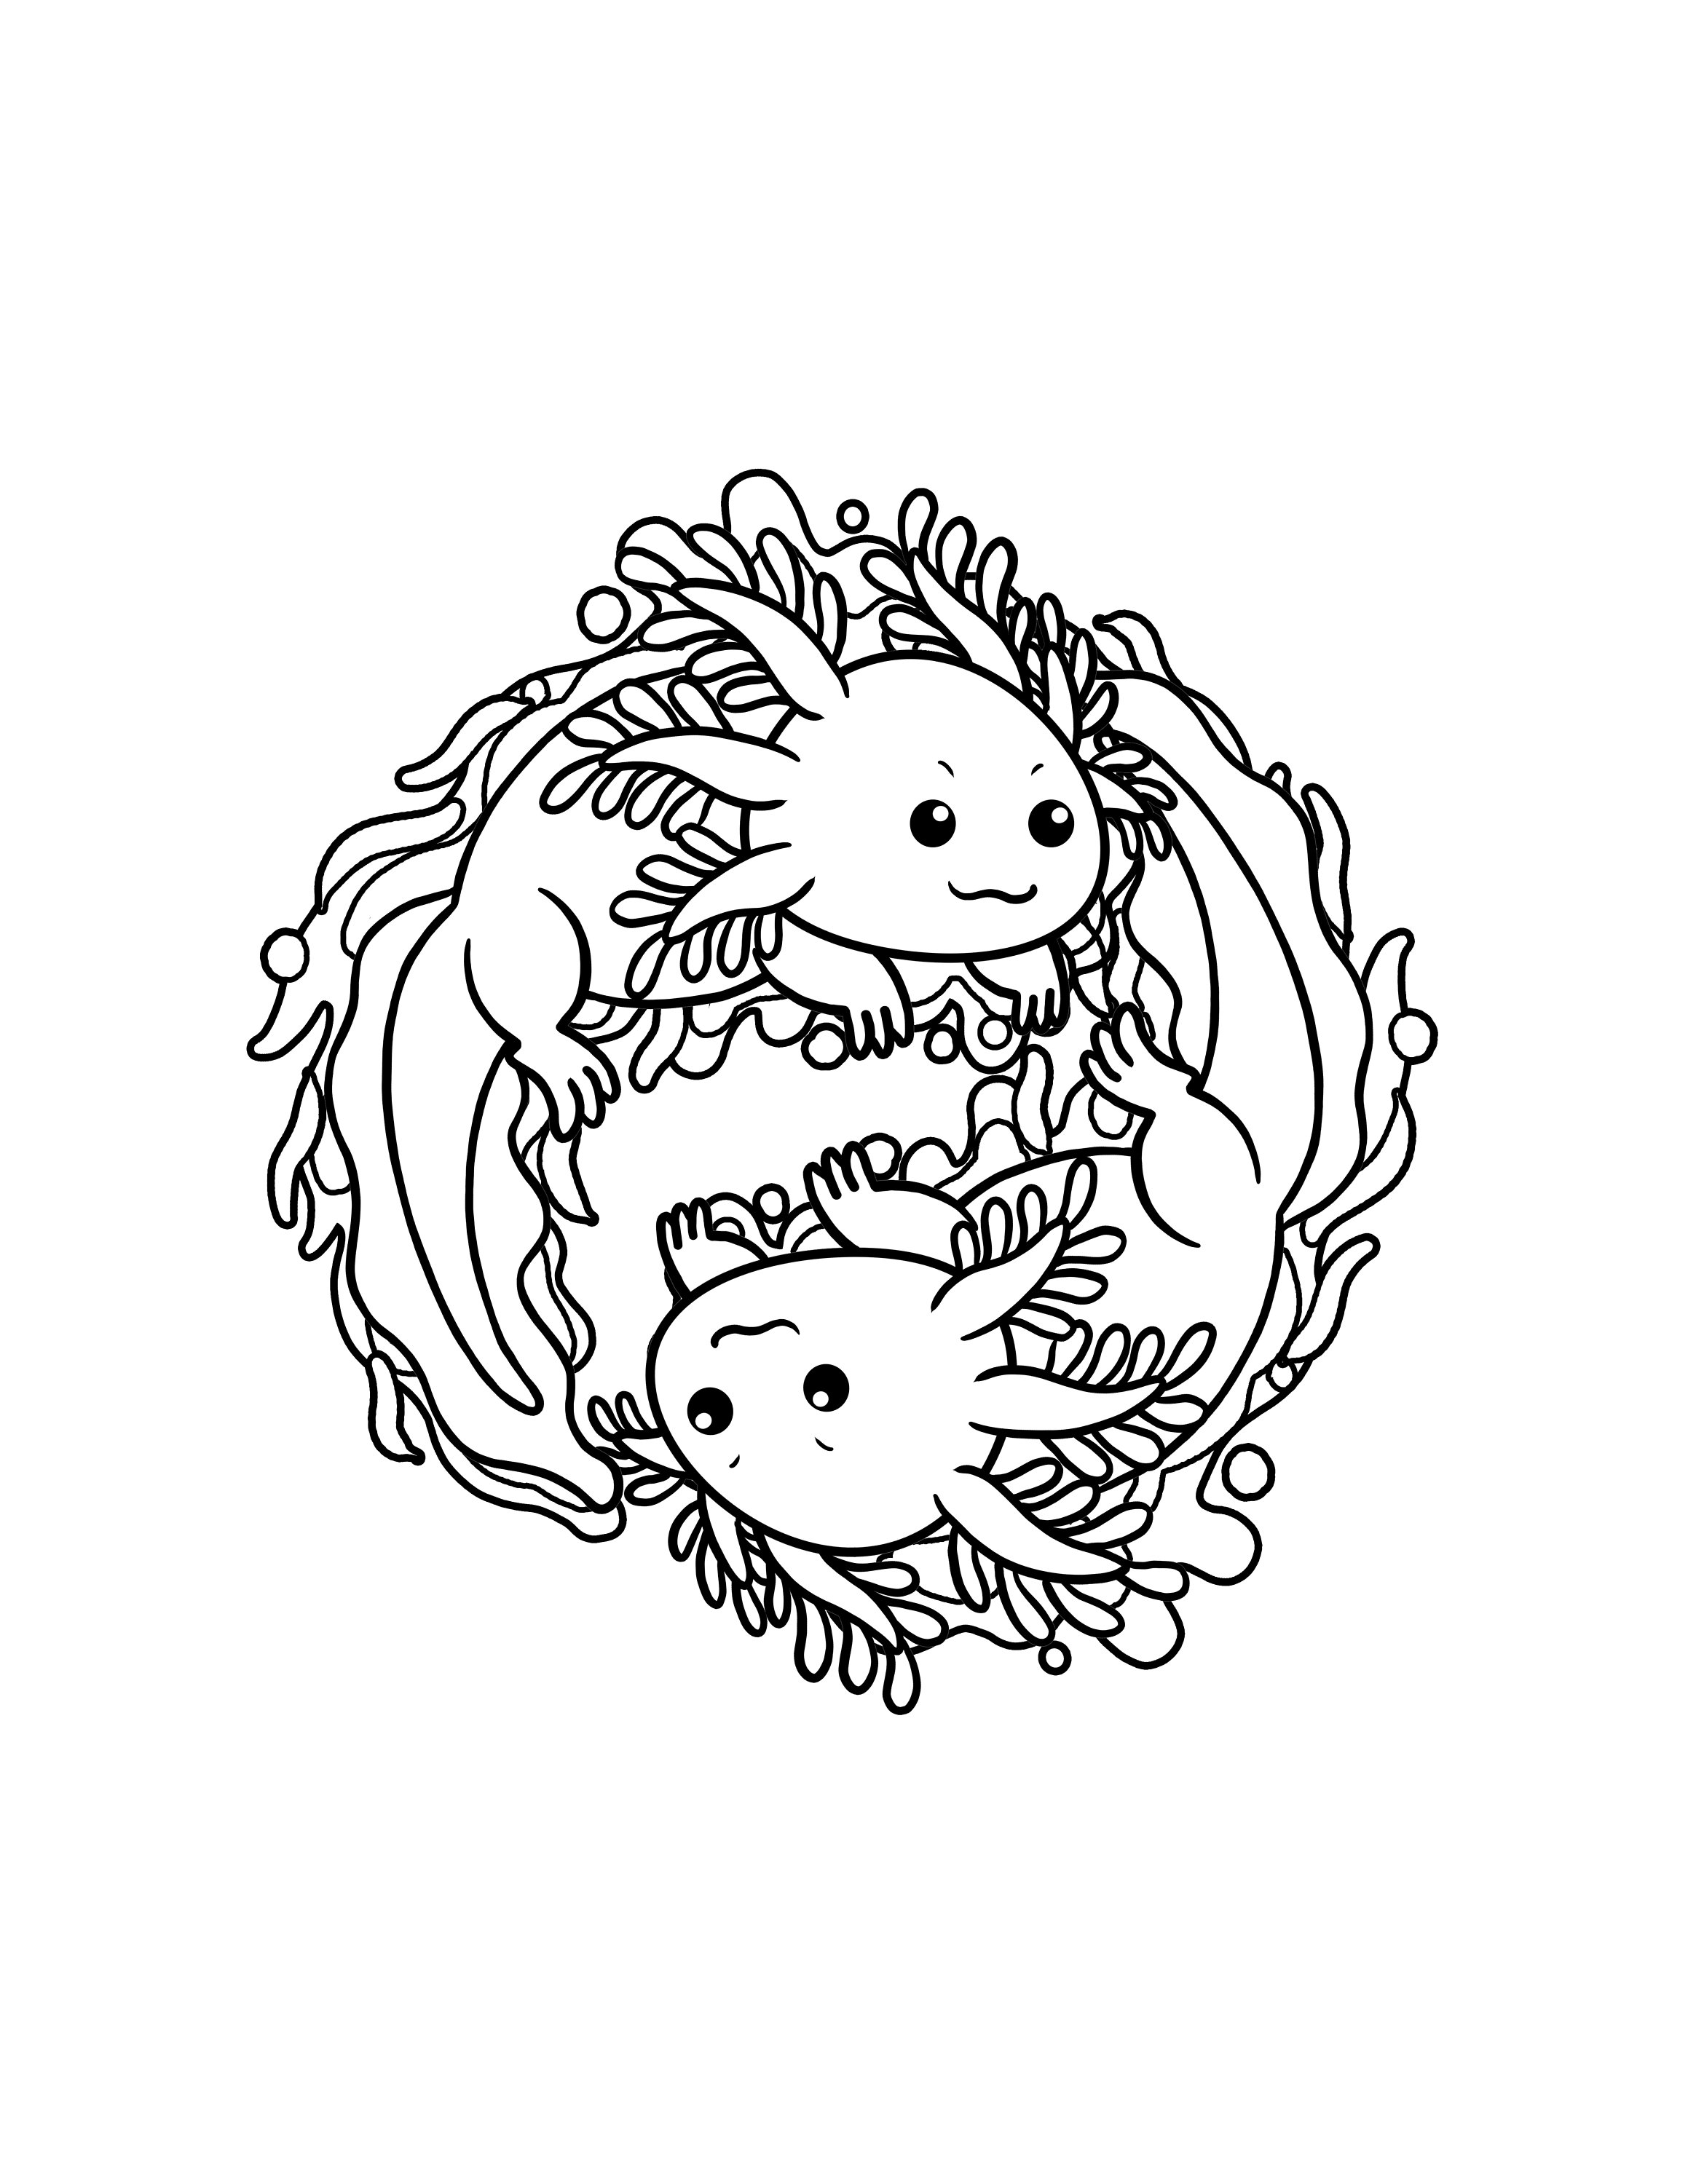 axolotl-yinyang-cute-axolotl-coloring-page-digital-etsy-denmark